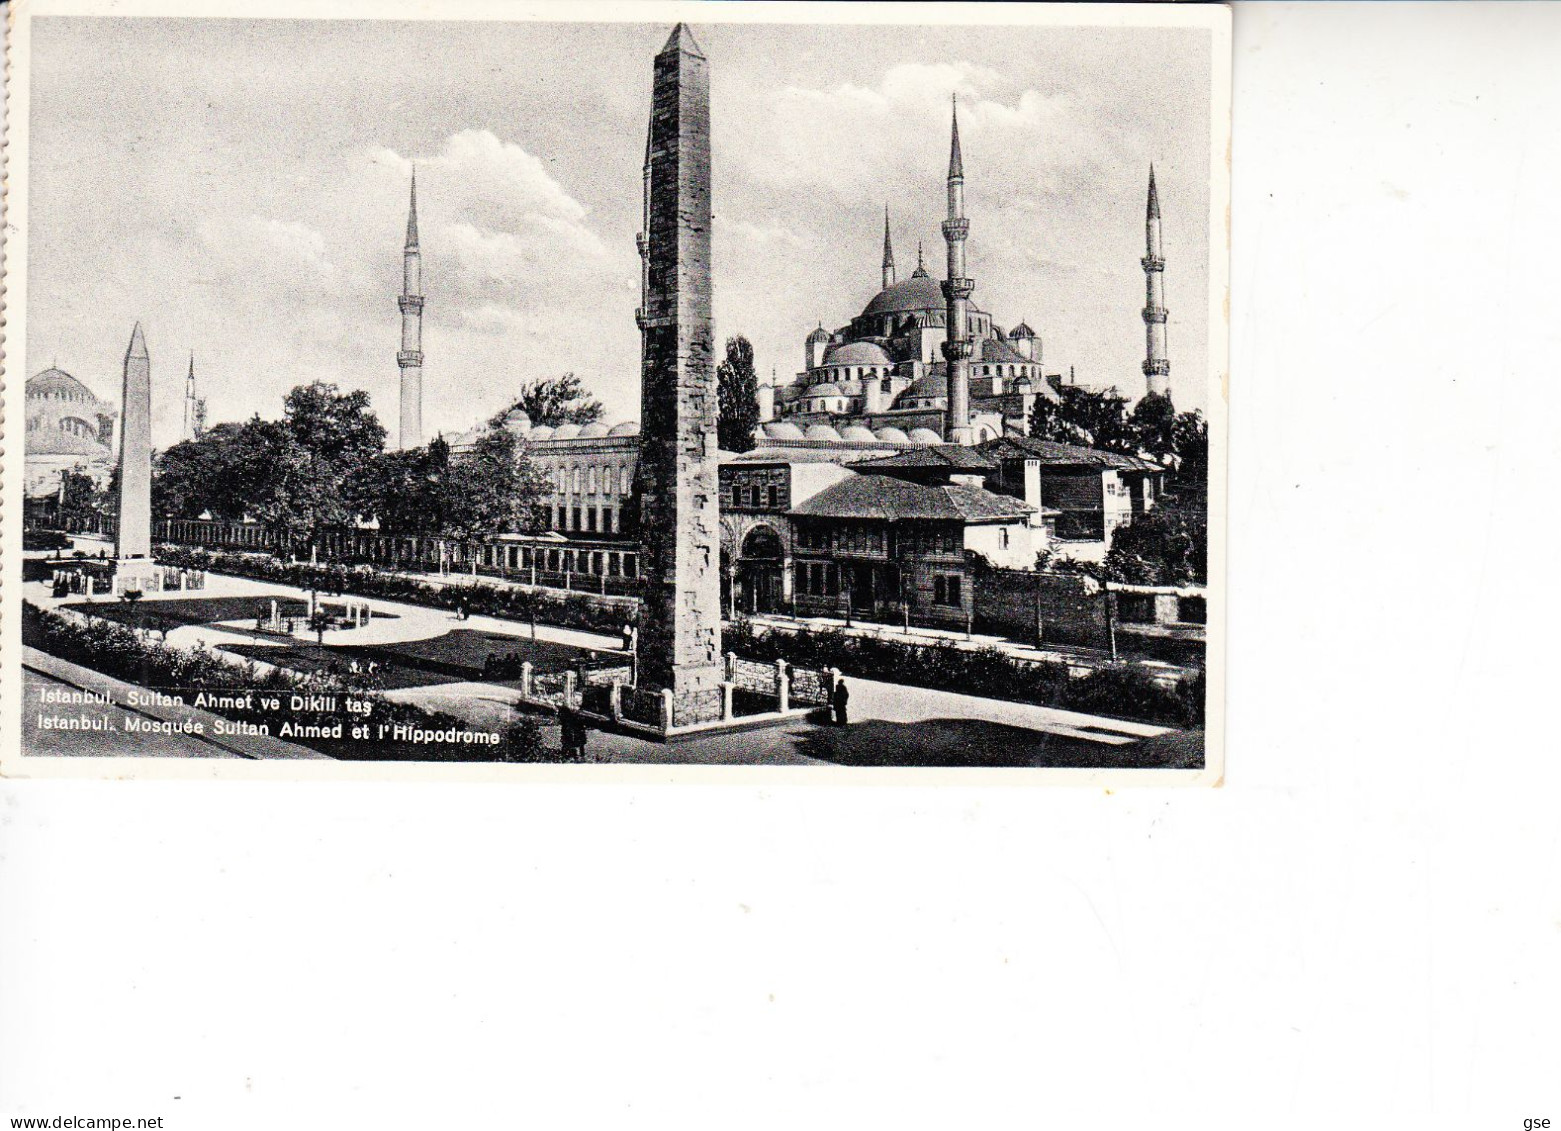 TUECHIA  1946 - Cartolina Per Zurich - Storia Postale